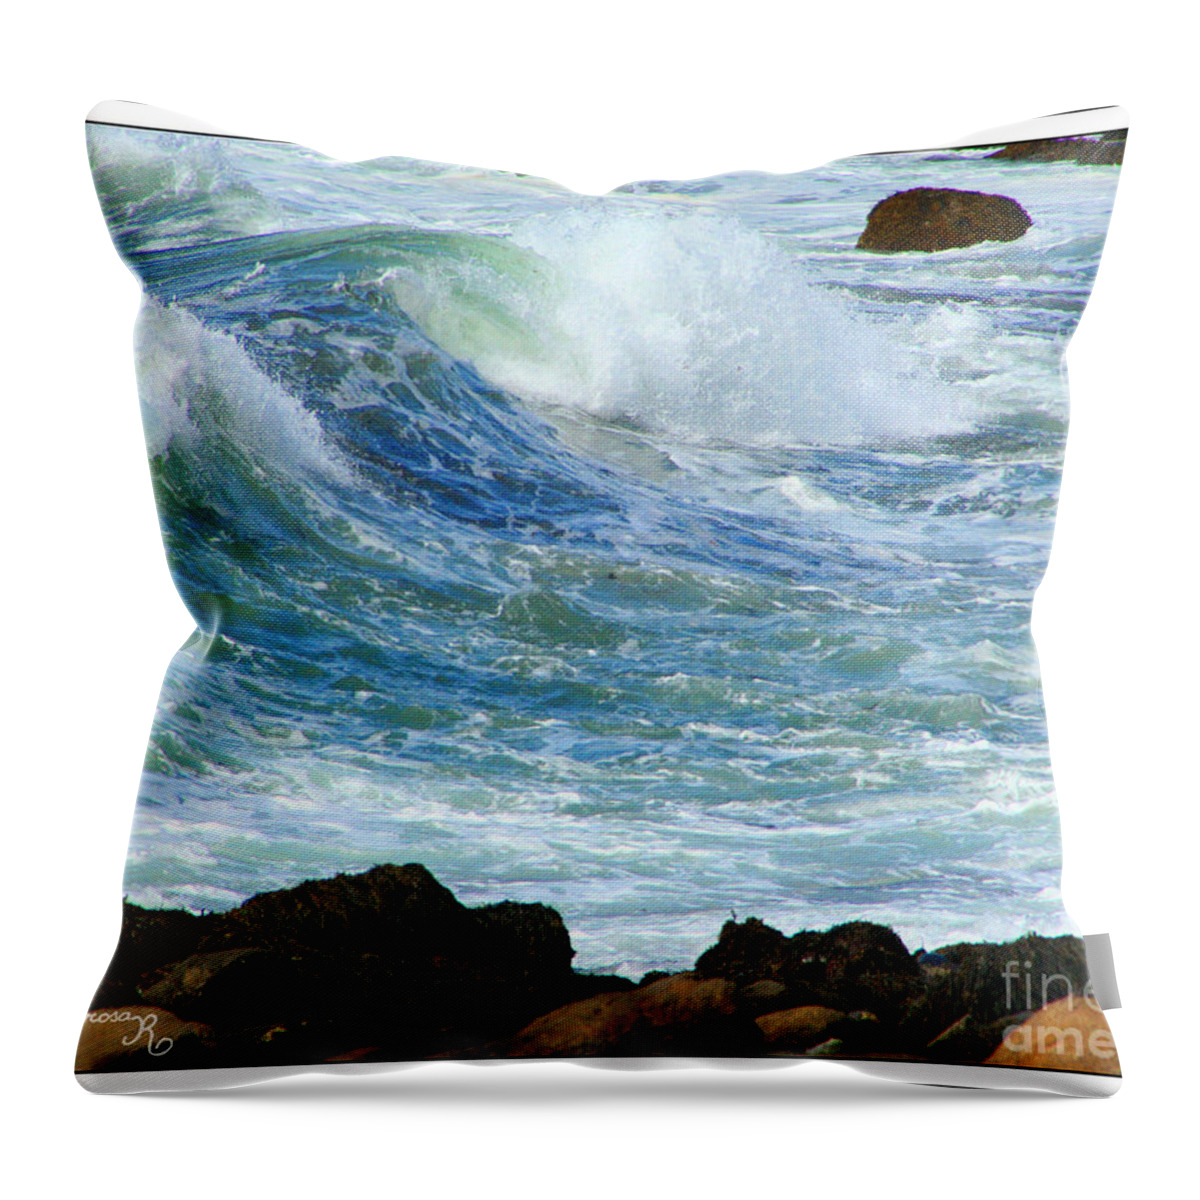 Water Throw Pillow featuring the photograph Rough Seas #2 by Mariarosa Rockefeller